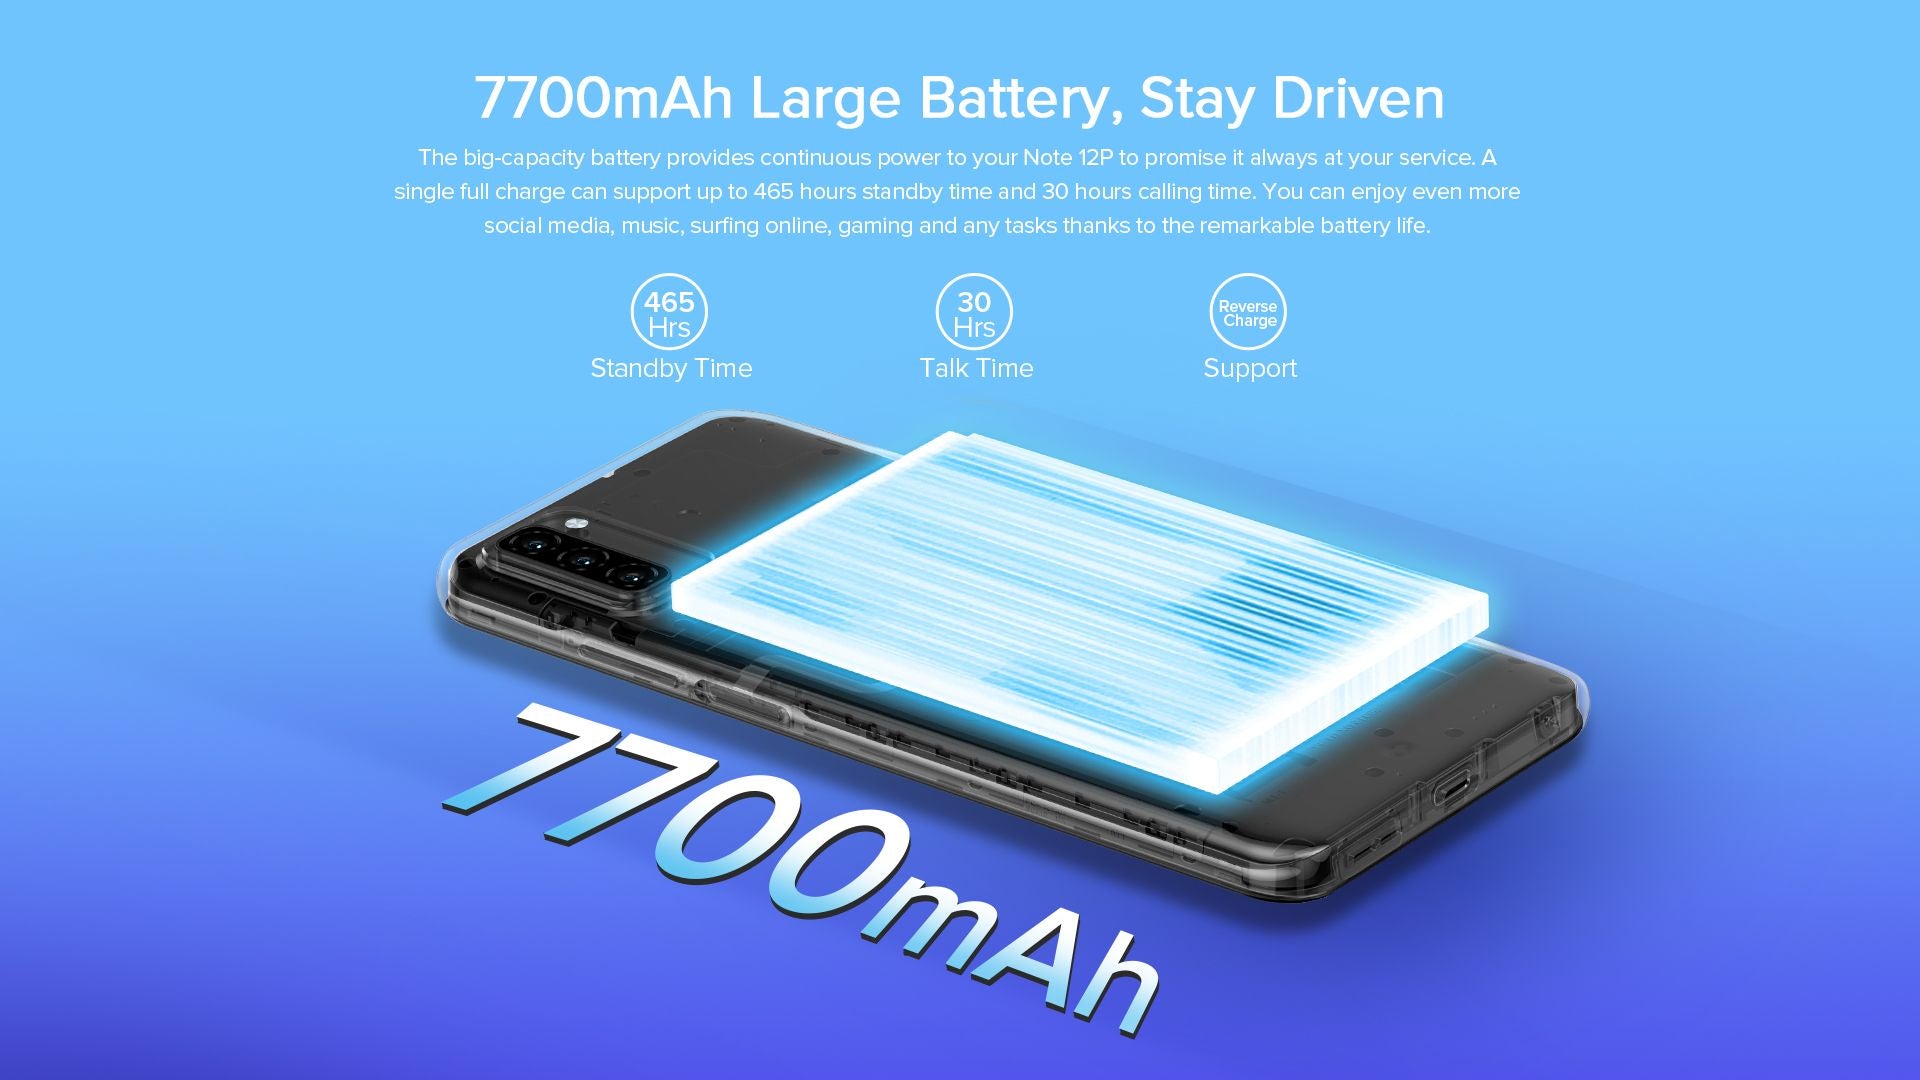 Ulefone Note 12P Octa-core Processor Smartphone With 7700mAh Battery